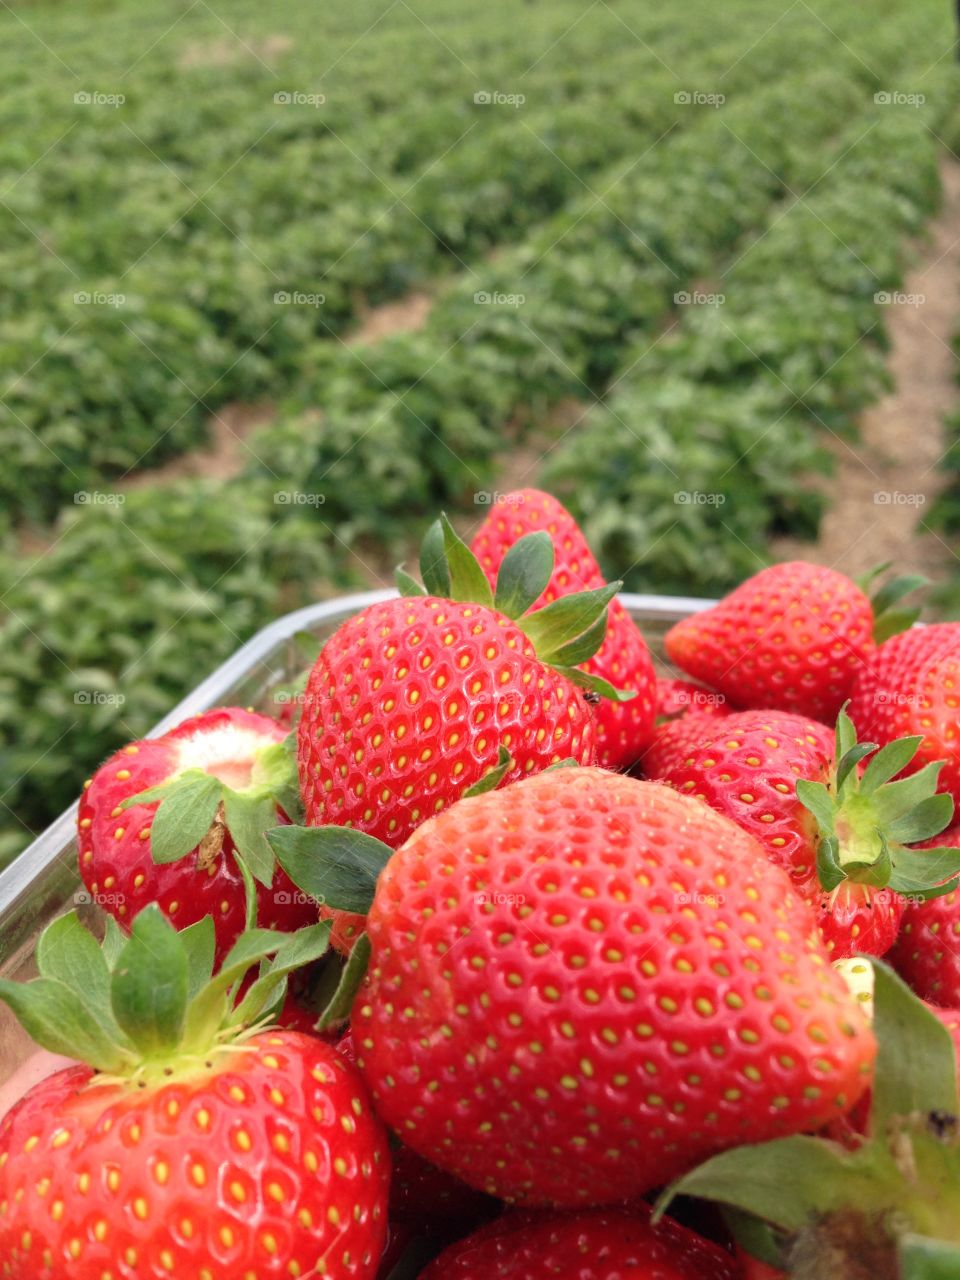 Strawberry picking in Yorkshire UK